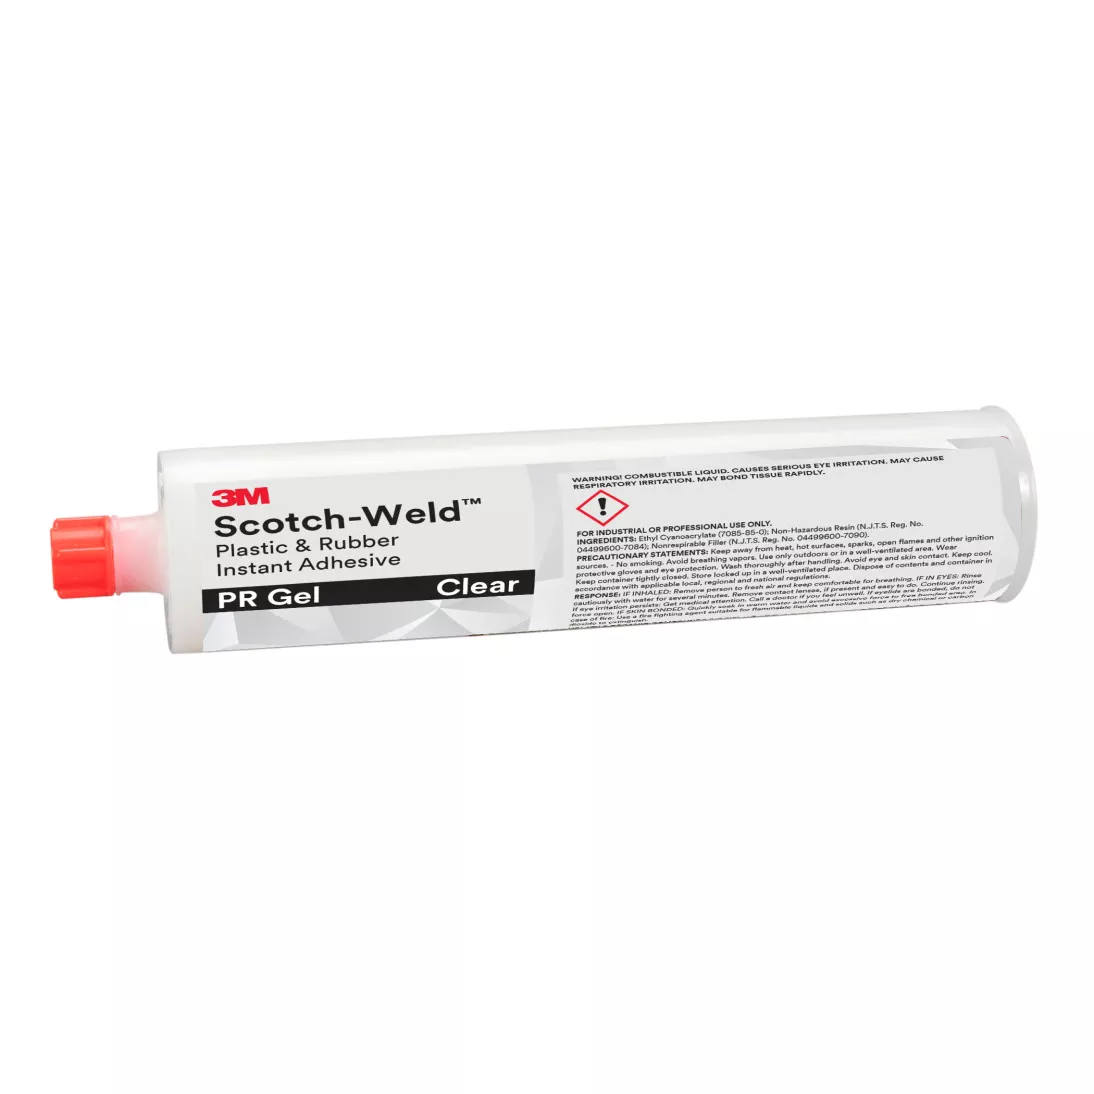 3M™ Scotch-Weld™ Plastic & Rubber Instant Adhesive PR Gel, Clear, 300
Gram Cartridge, 12/case